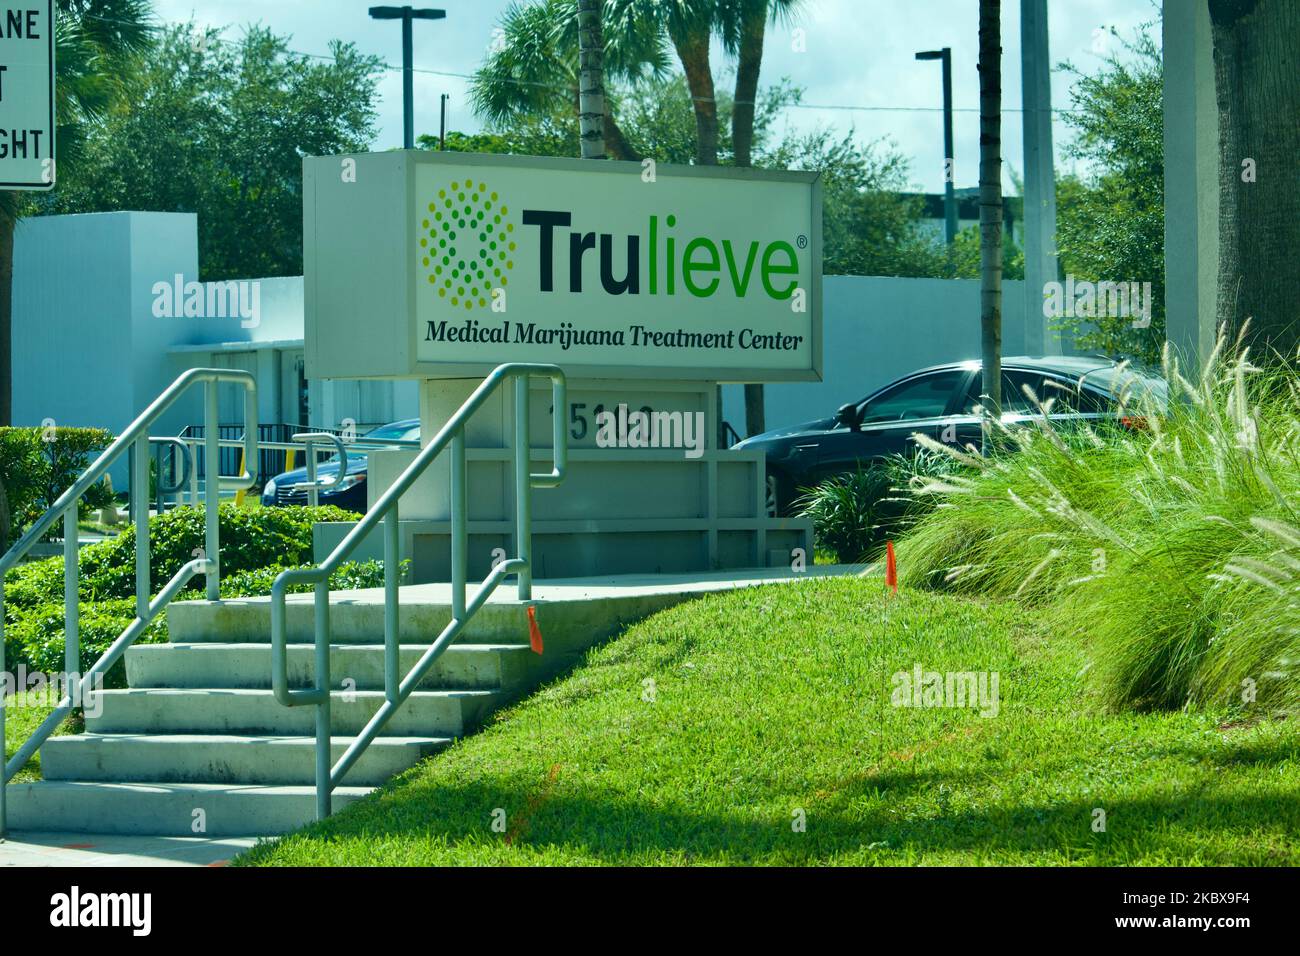 Trulieve Medical Marijuana Treatment Center brick and mortar store. Stock Photo